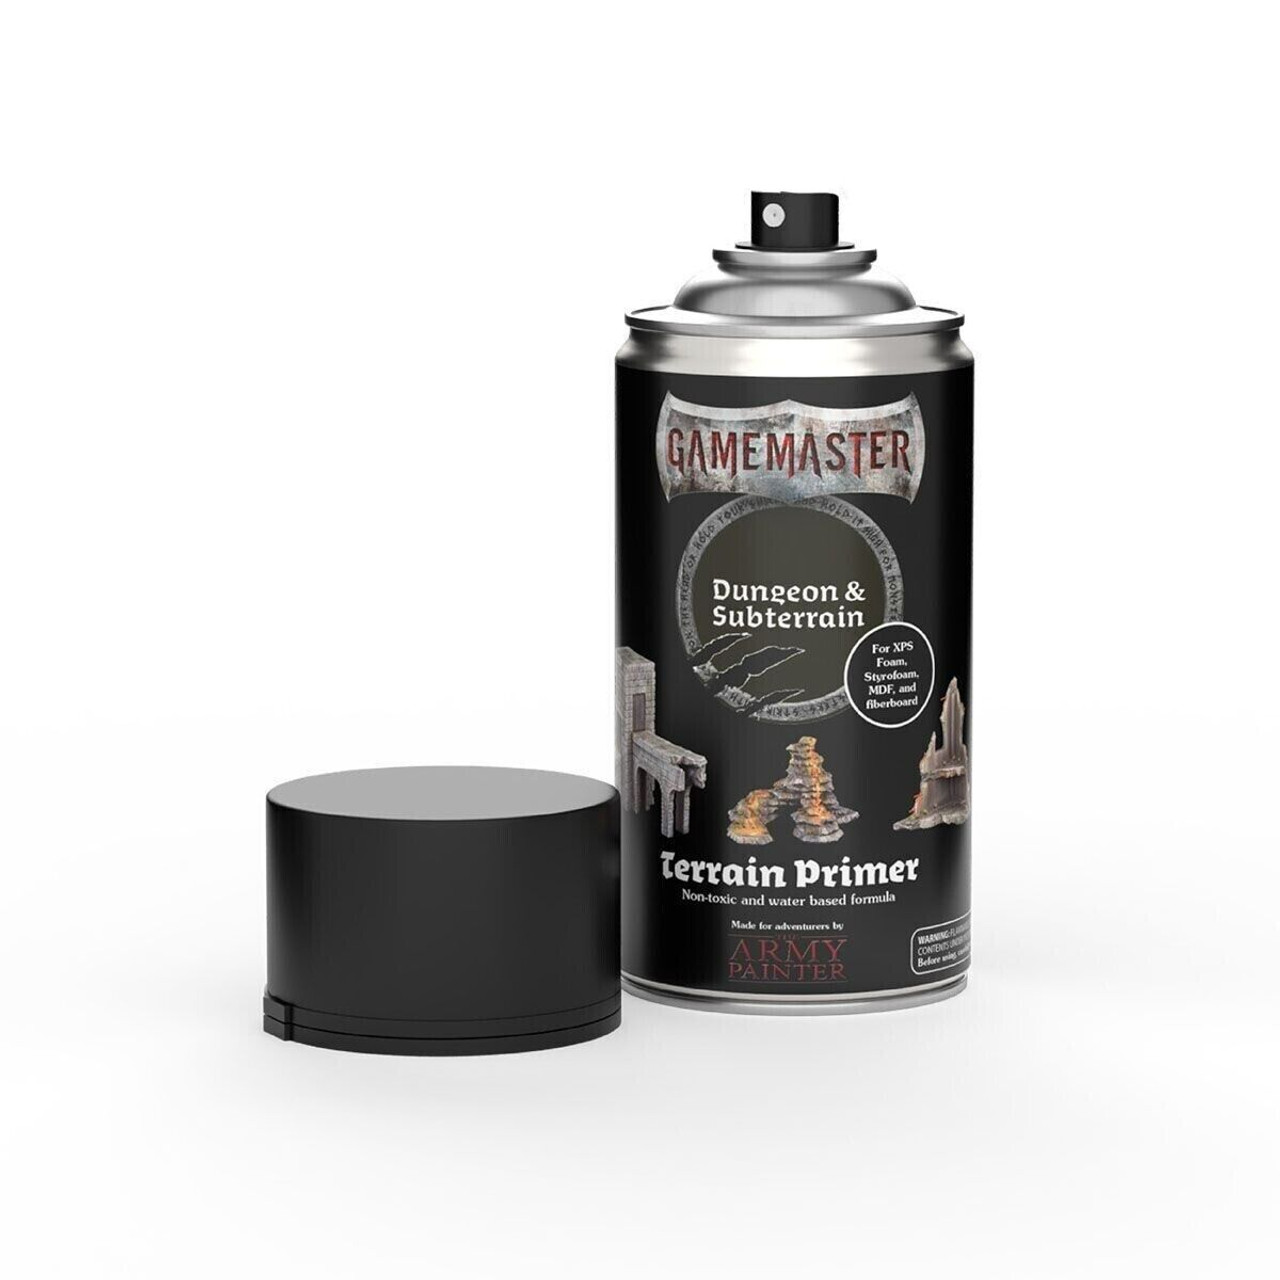 GameMaster - Terrain Primer: Dungeon & Subterrain Spray Paint